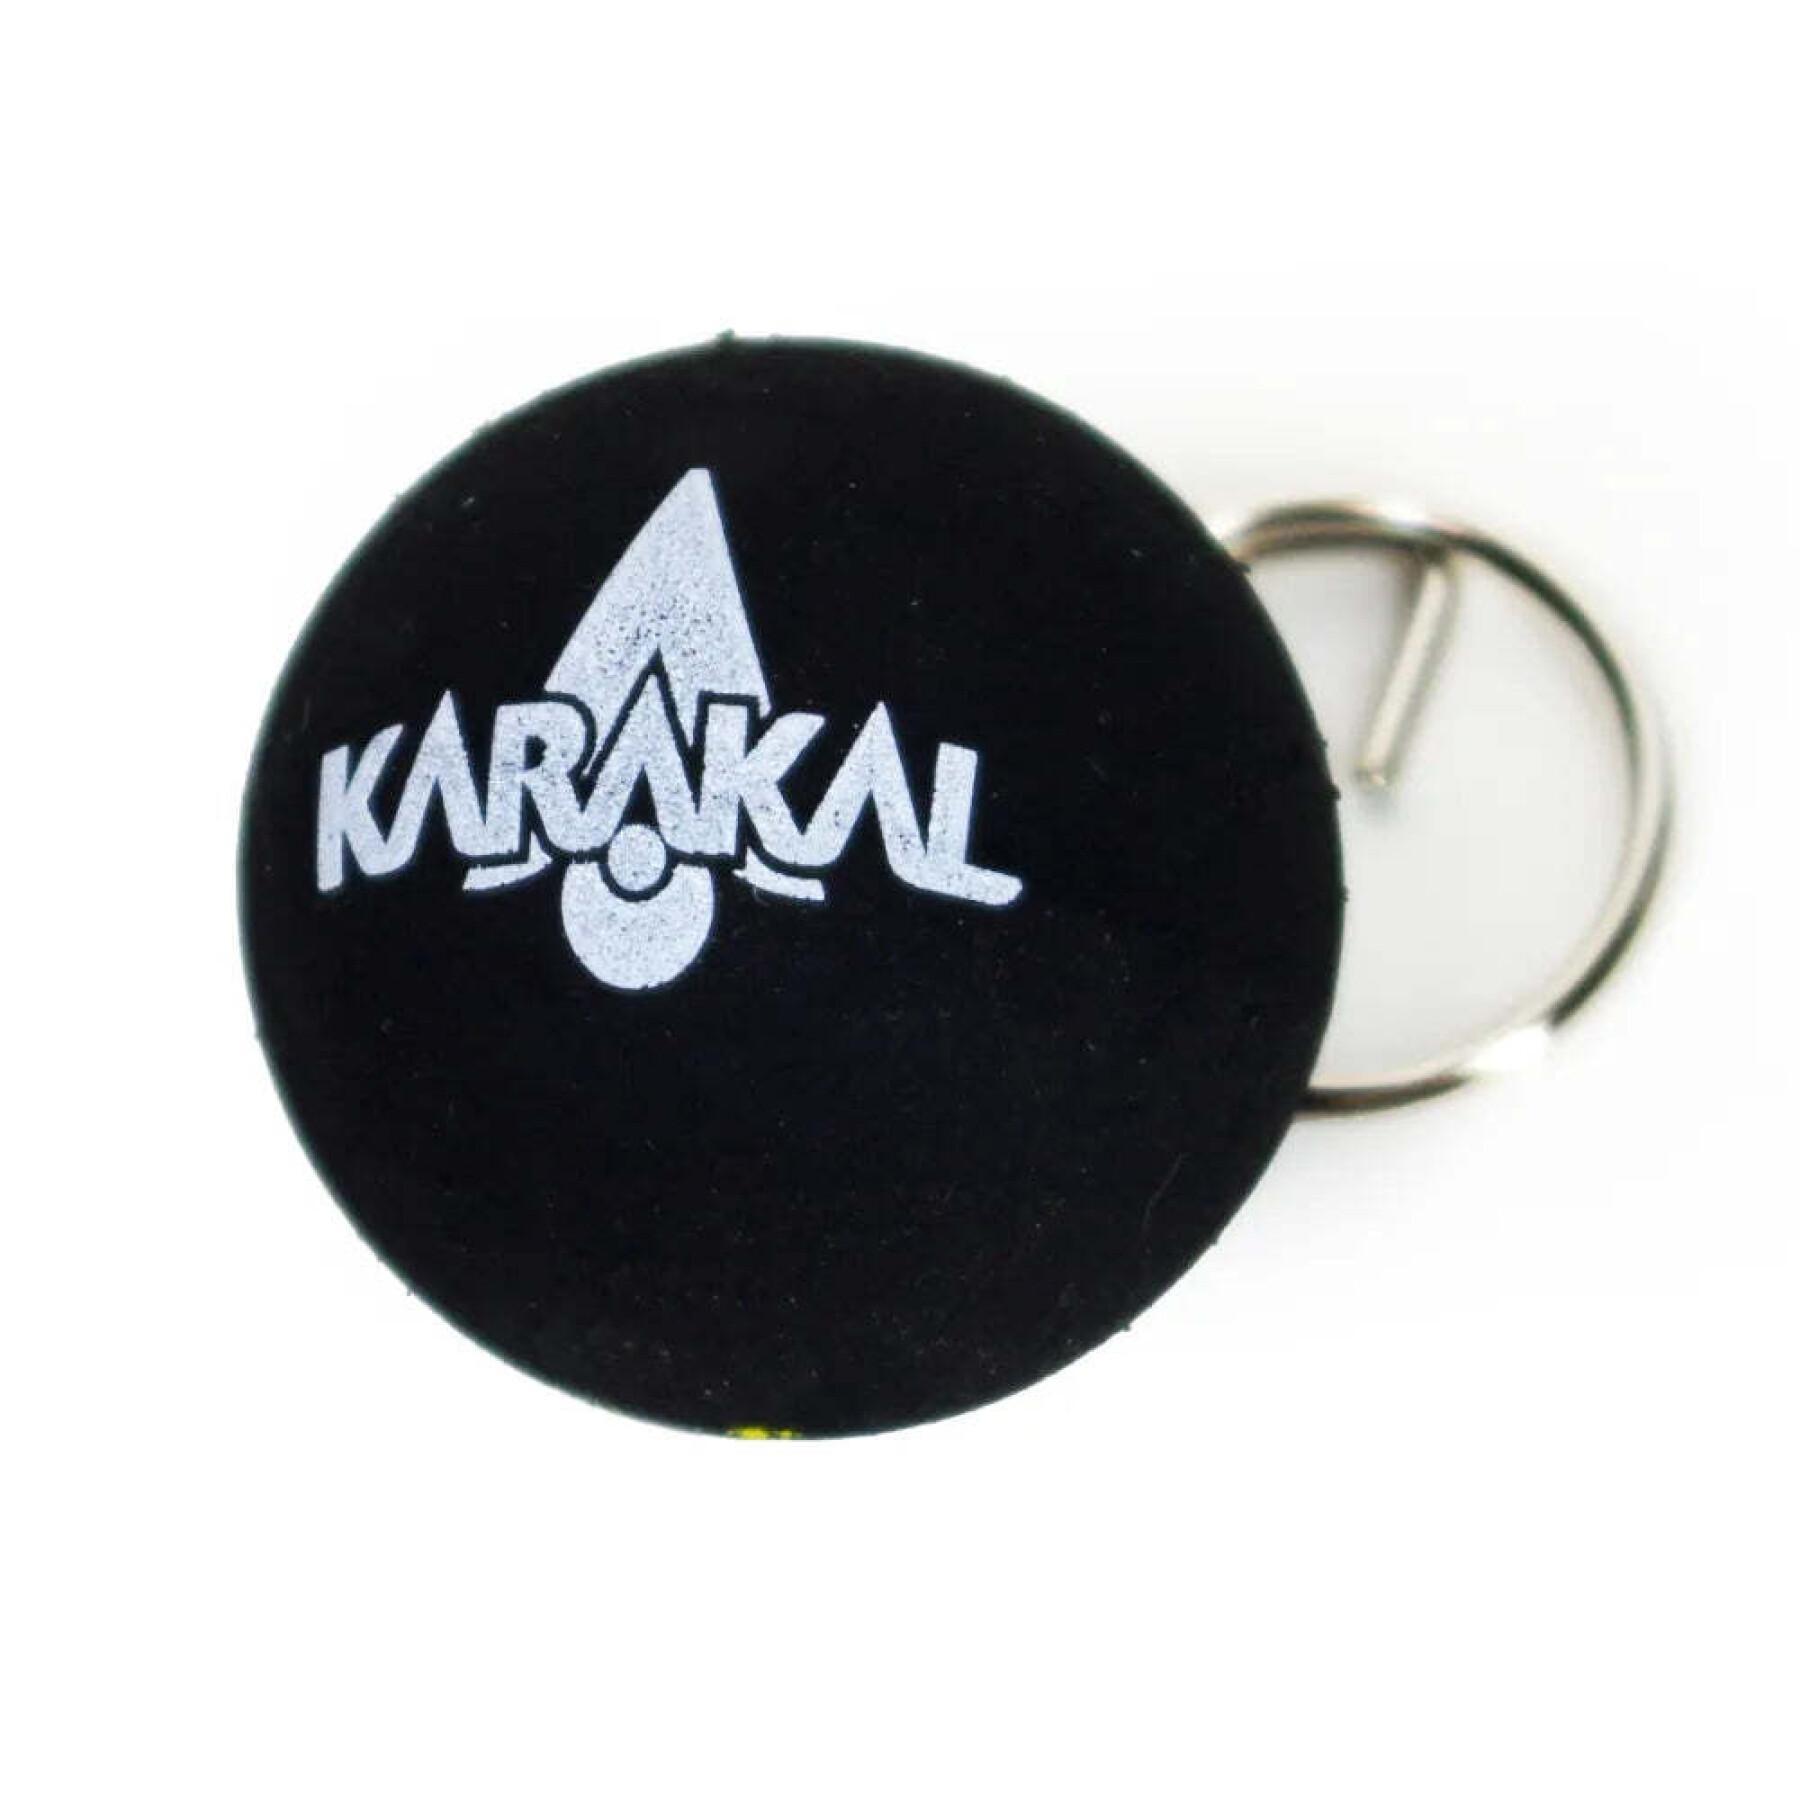 Portachiavi a forma di palla da squash Karakal